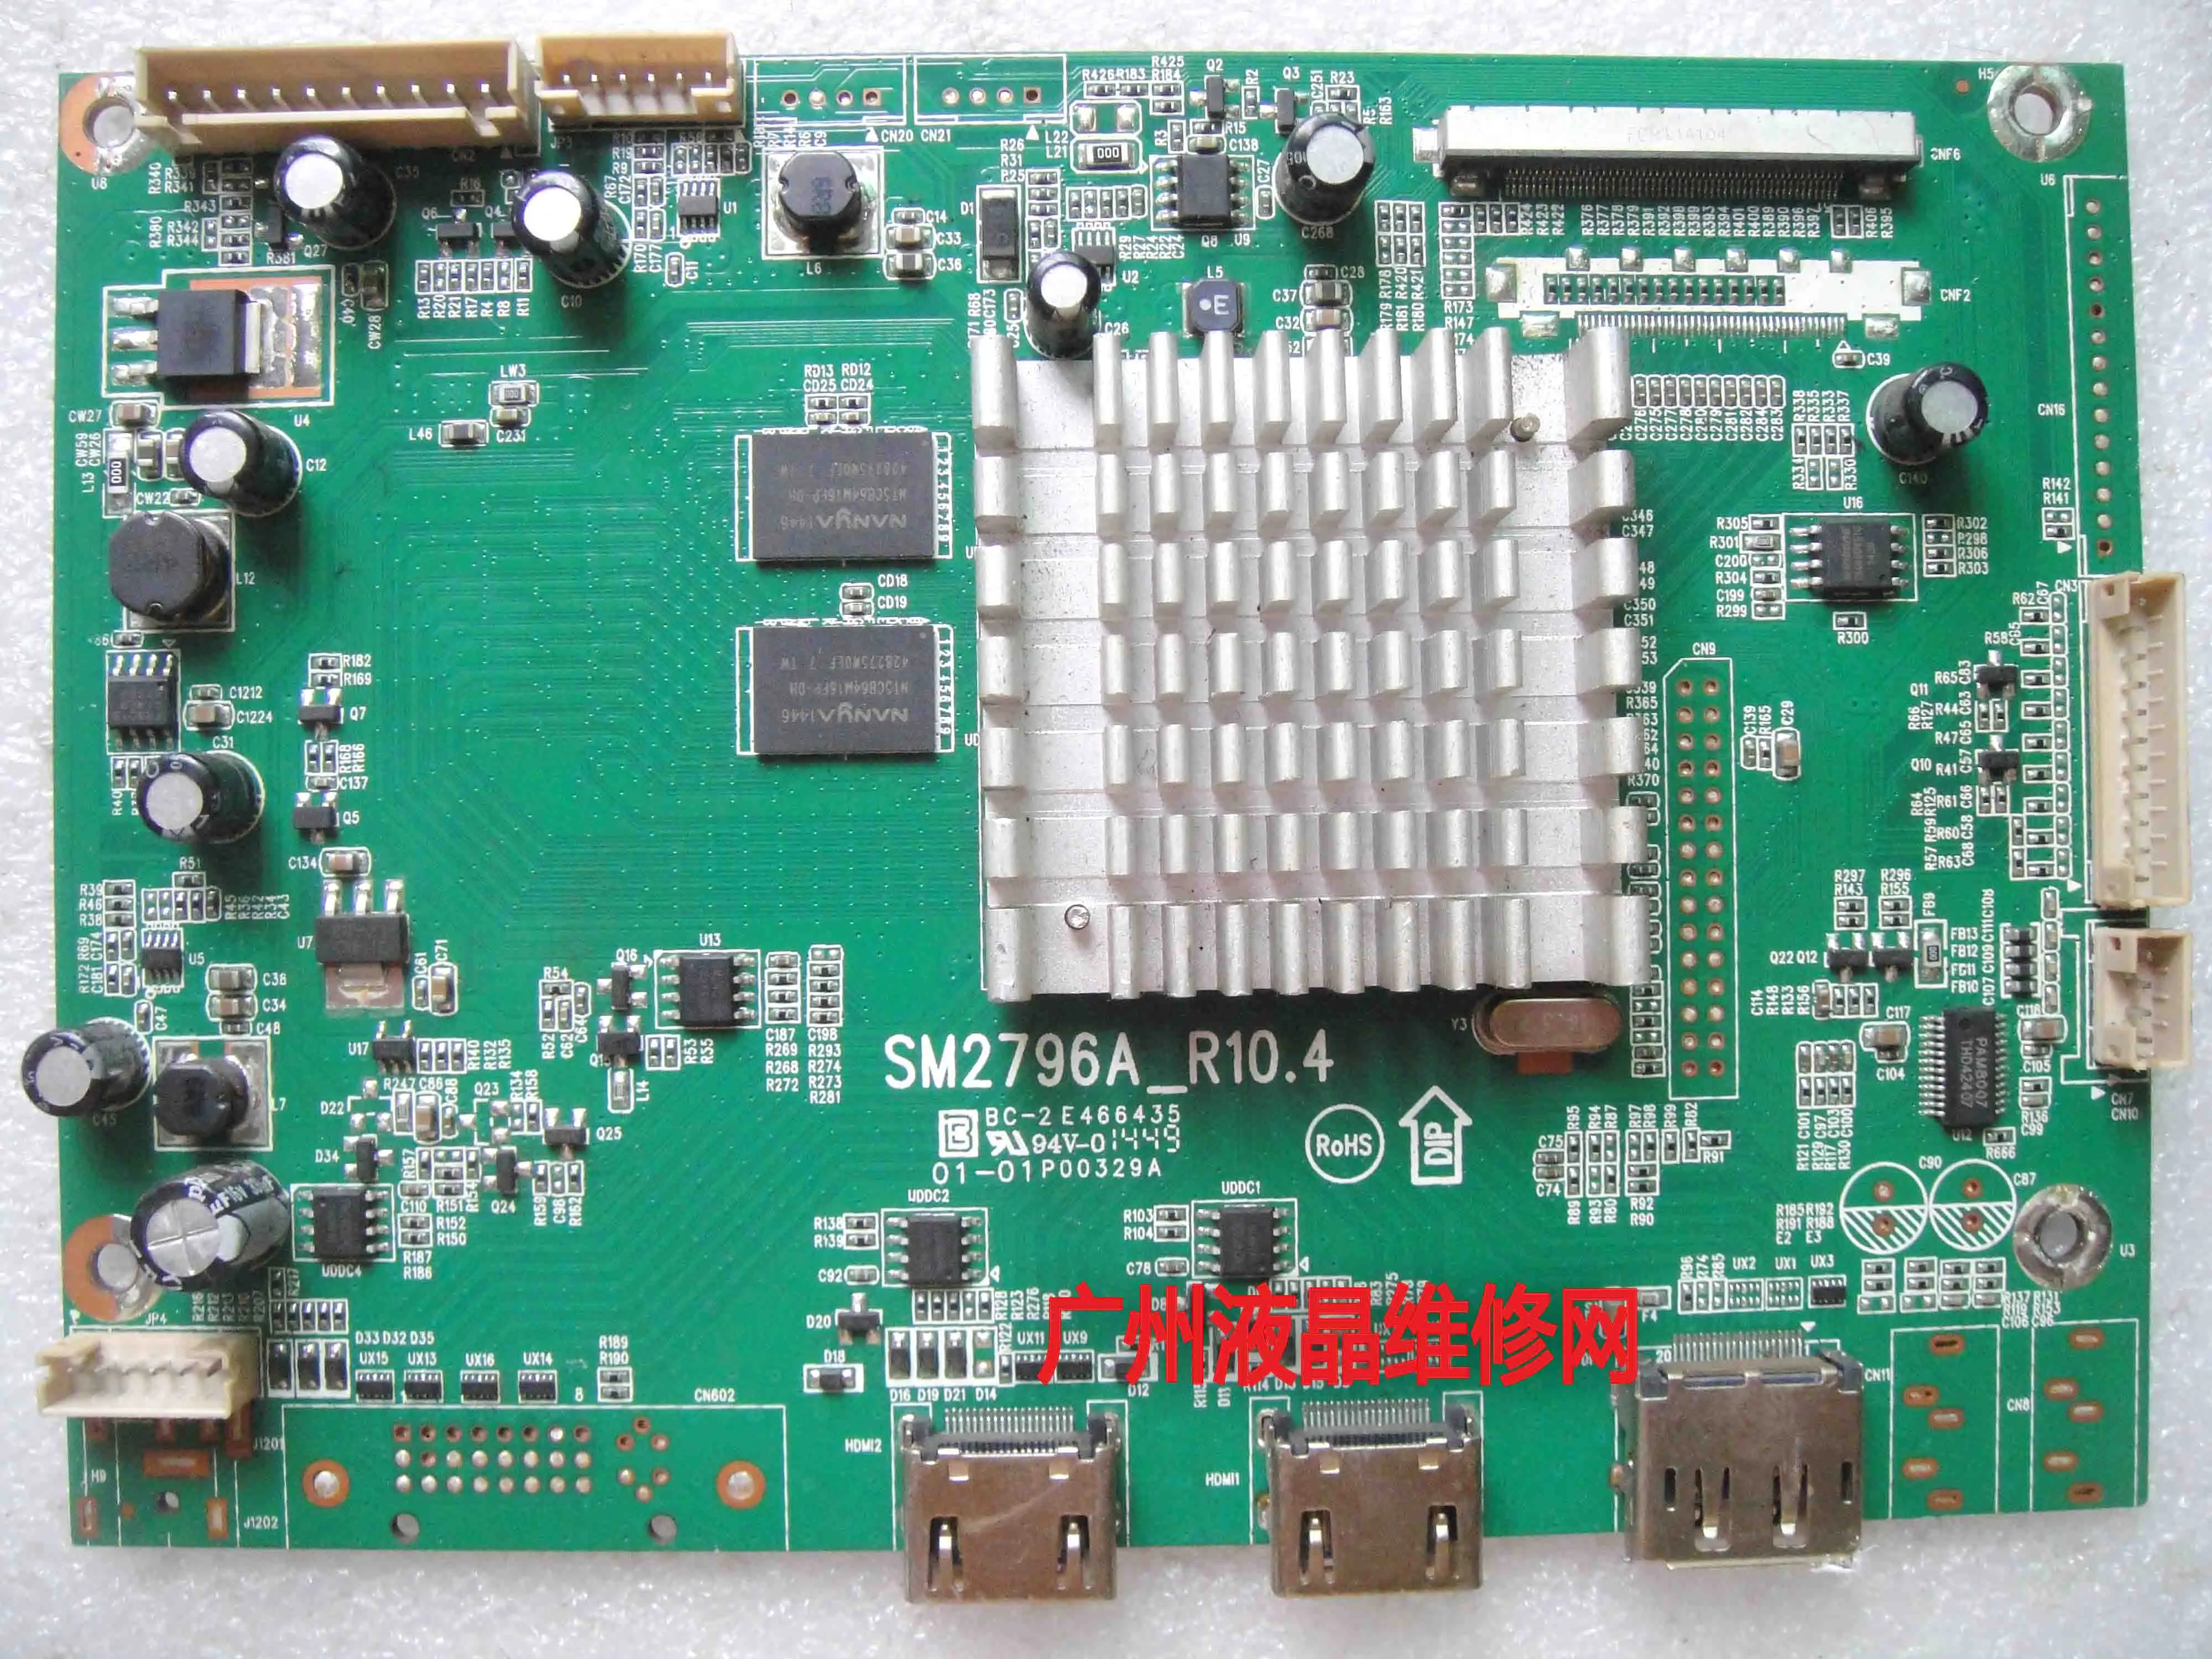 

Assembly Machine E43b700wd Original Motherboard Sm2796a_r10.4 Screen K430wd9 Measured